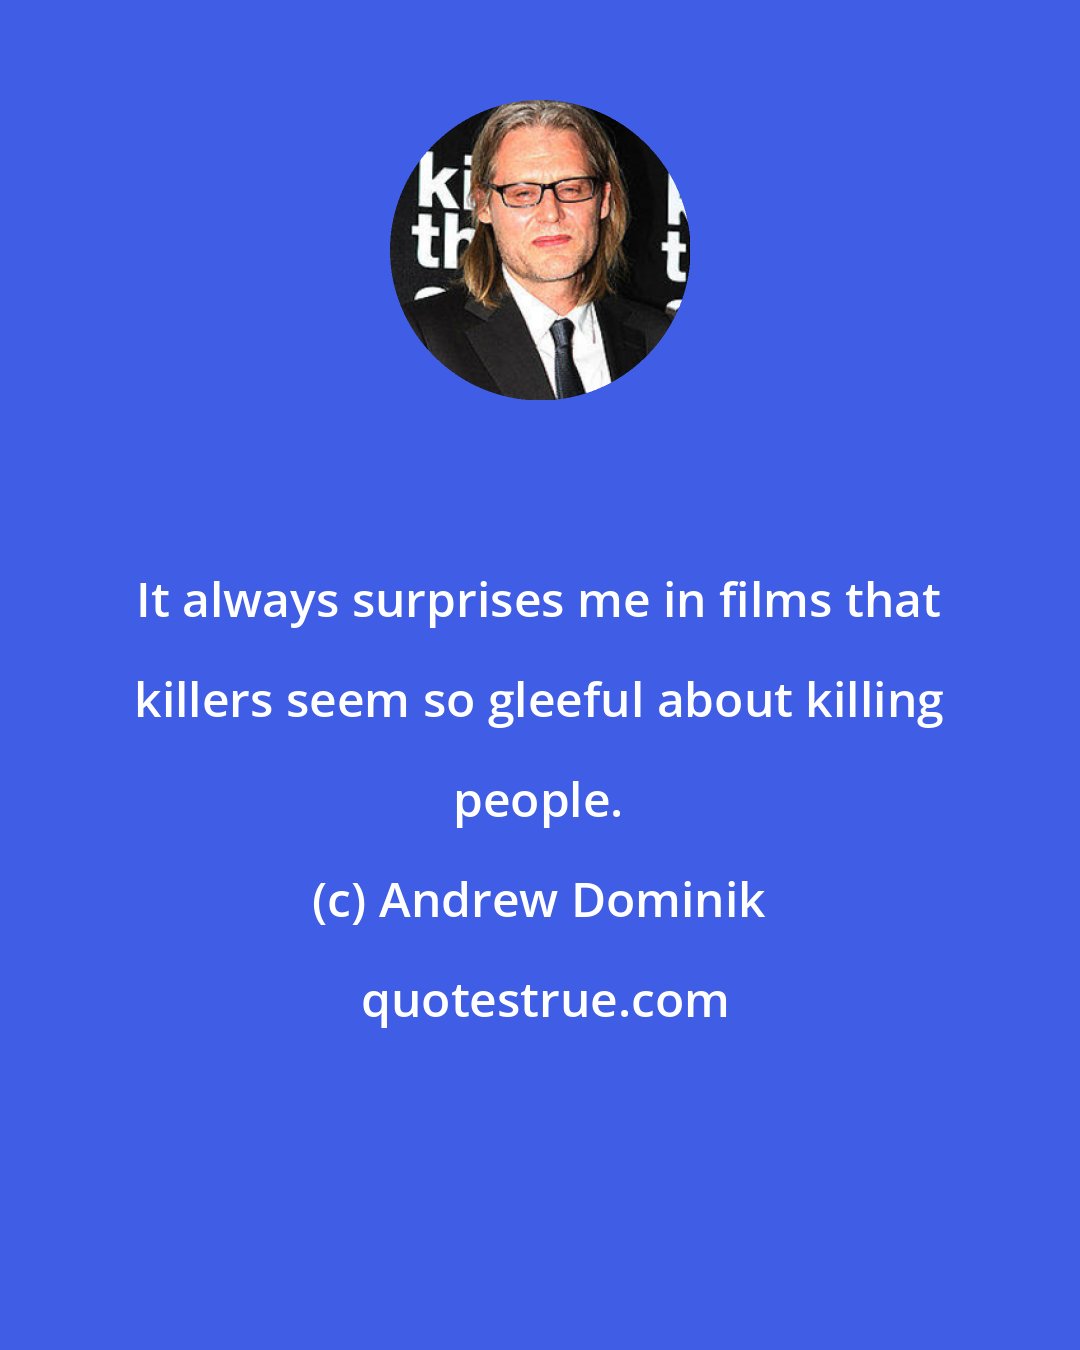 Andrew Dominik: It always surprises me in films that killers seem so gleeful about killing people.